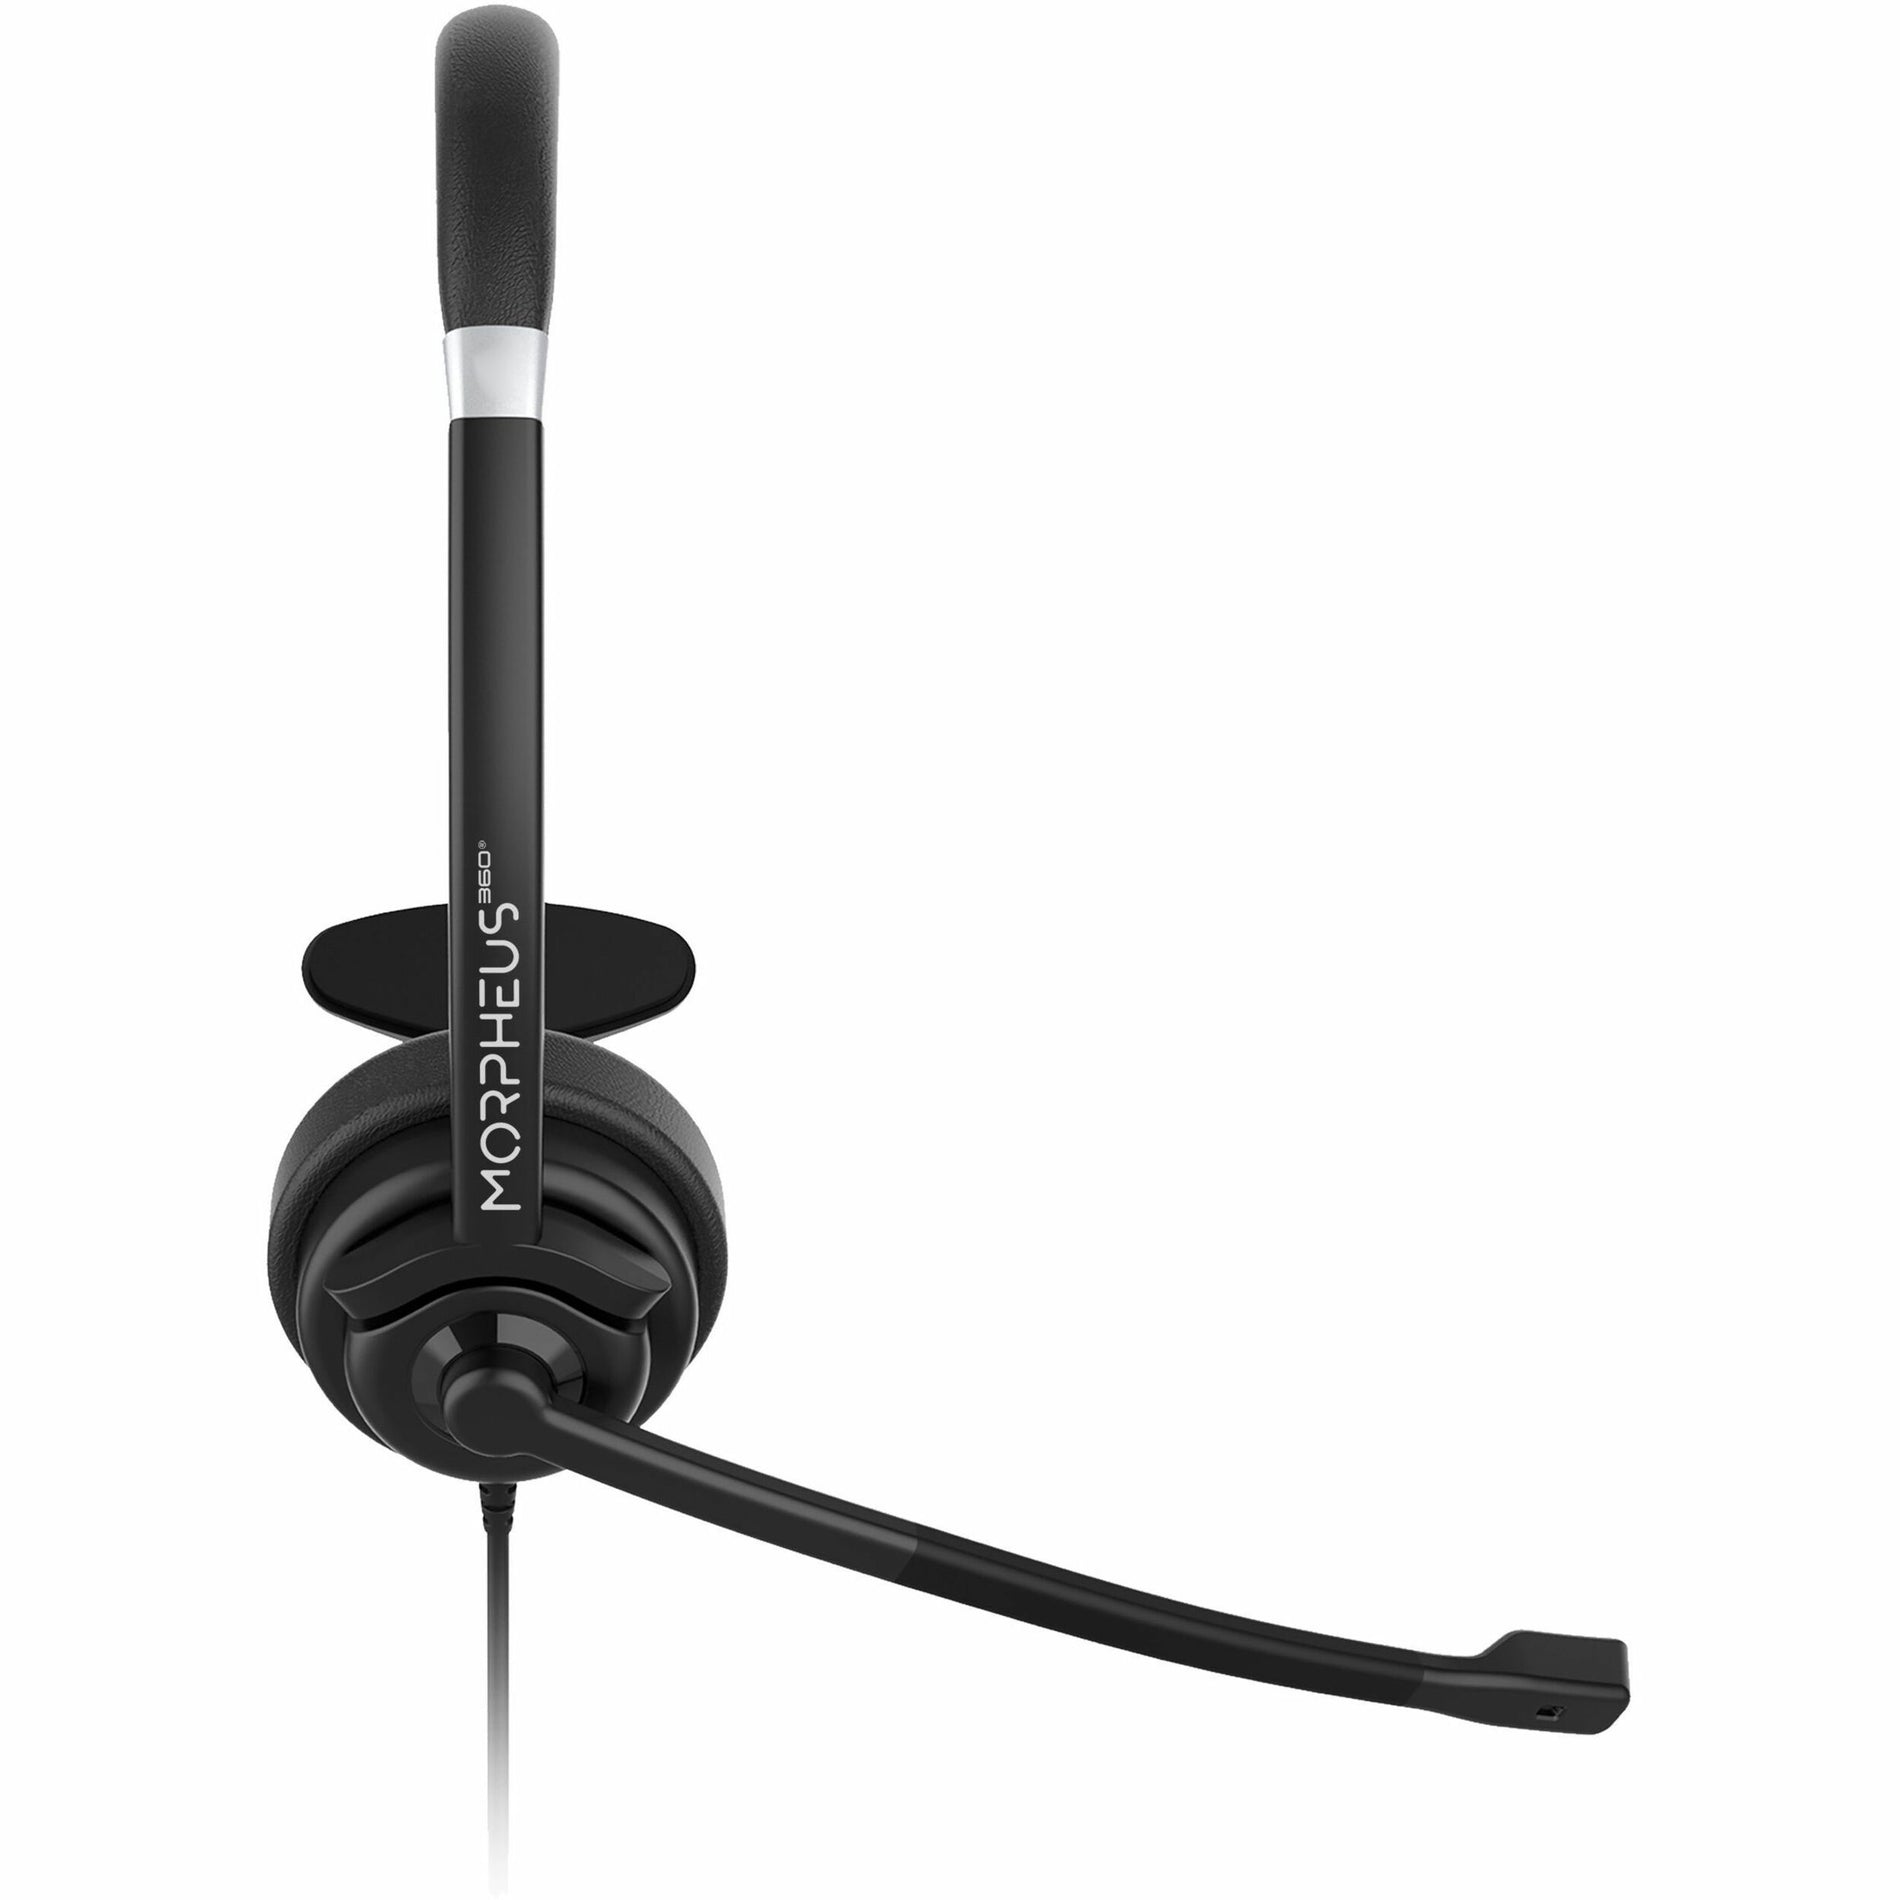 Morpheus 360 HS5200MU USB Mono Headset with Boom Microphone, Comfortable, Plug and Play, Lightweight